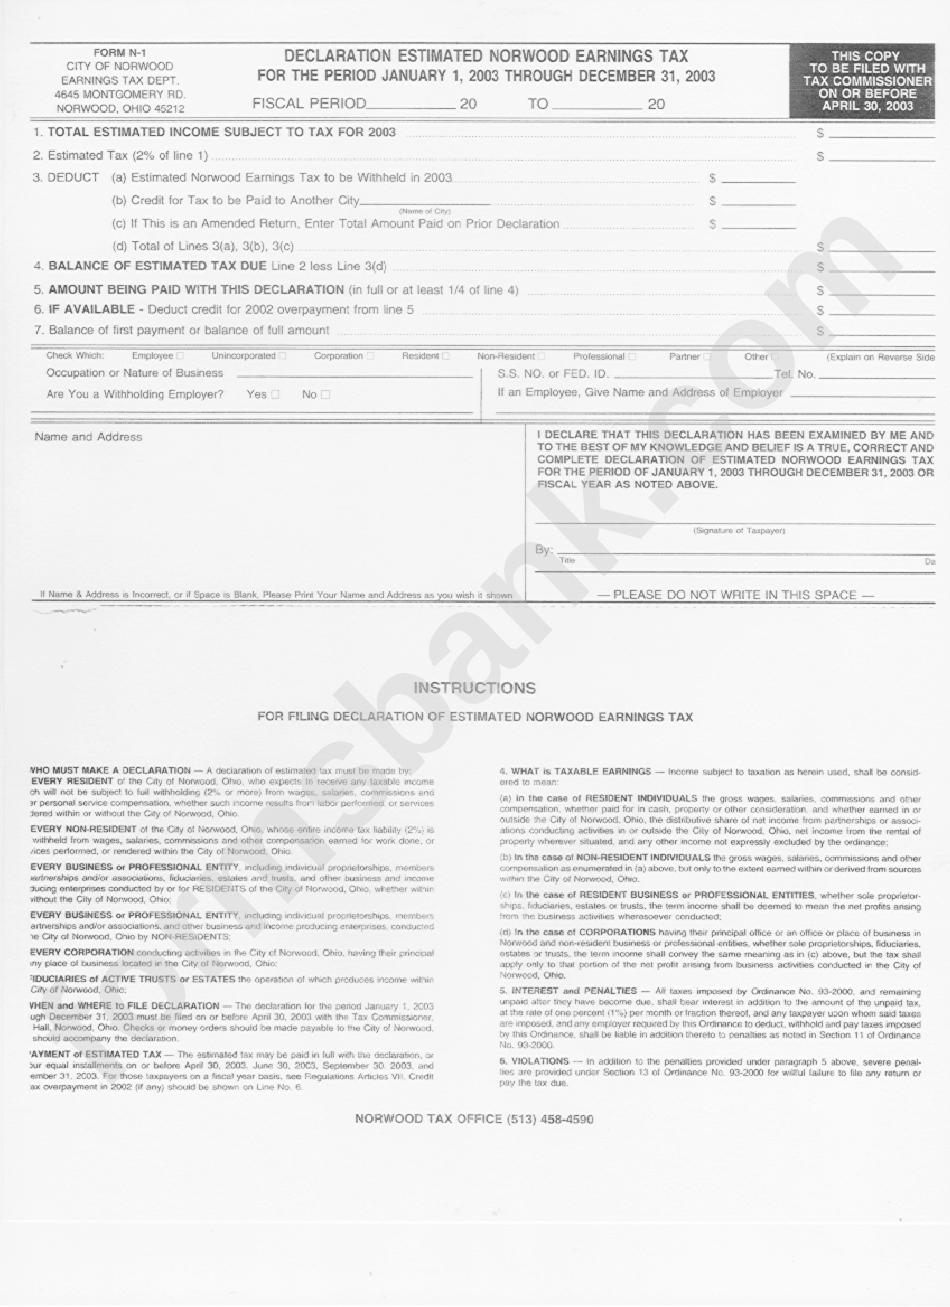 Form N-1 - Declaration Estimated Norwood Earnings Tax - 2003